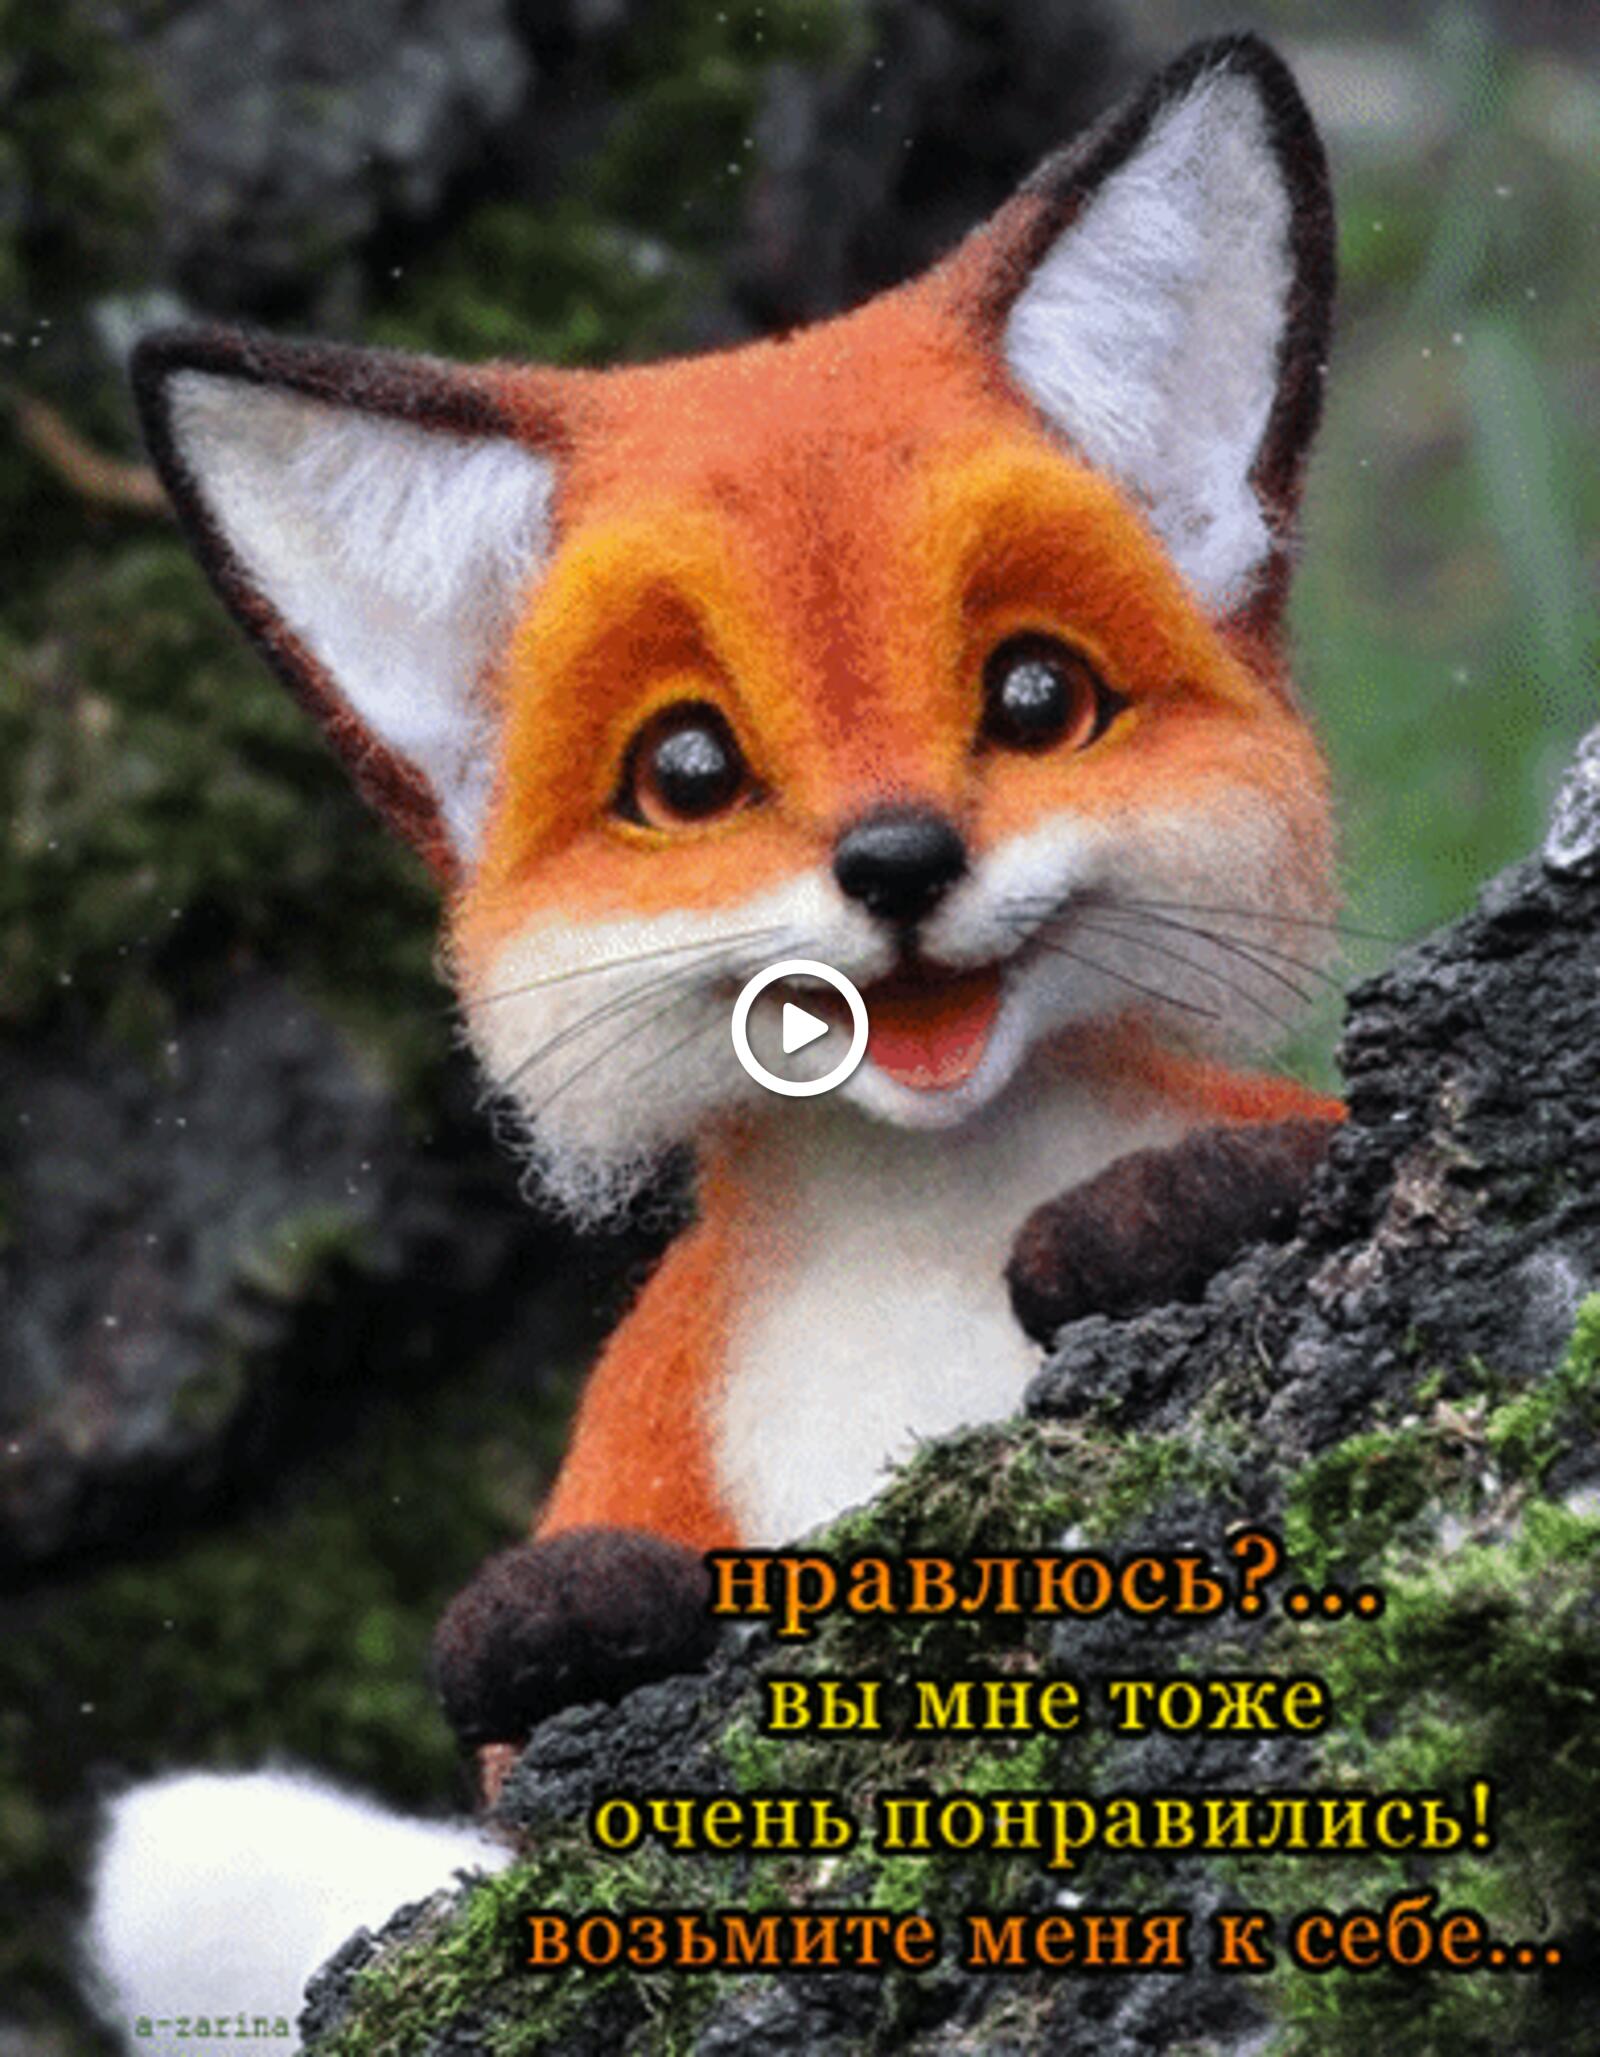 kit fox toy animation